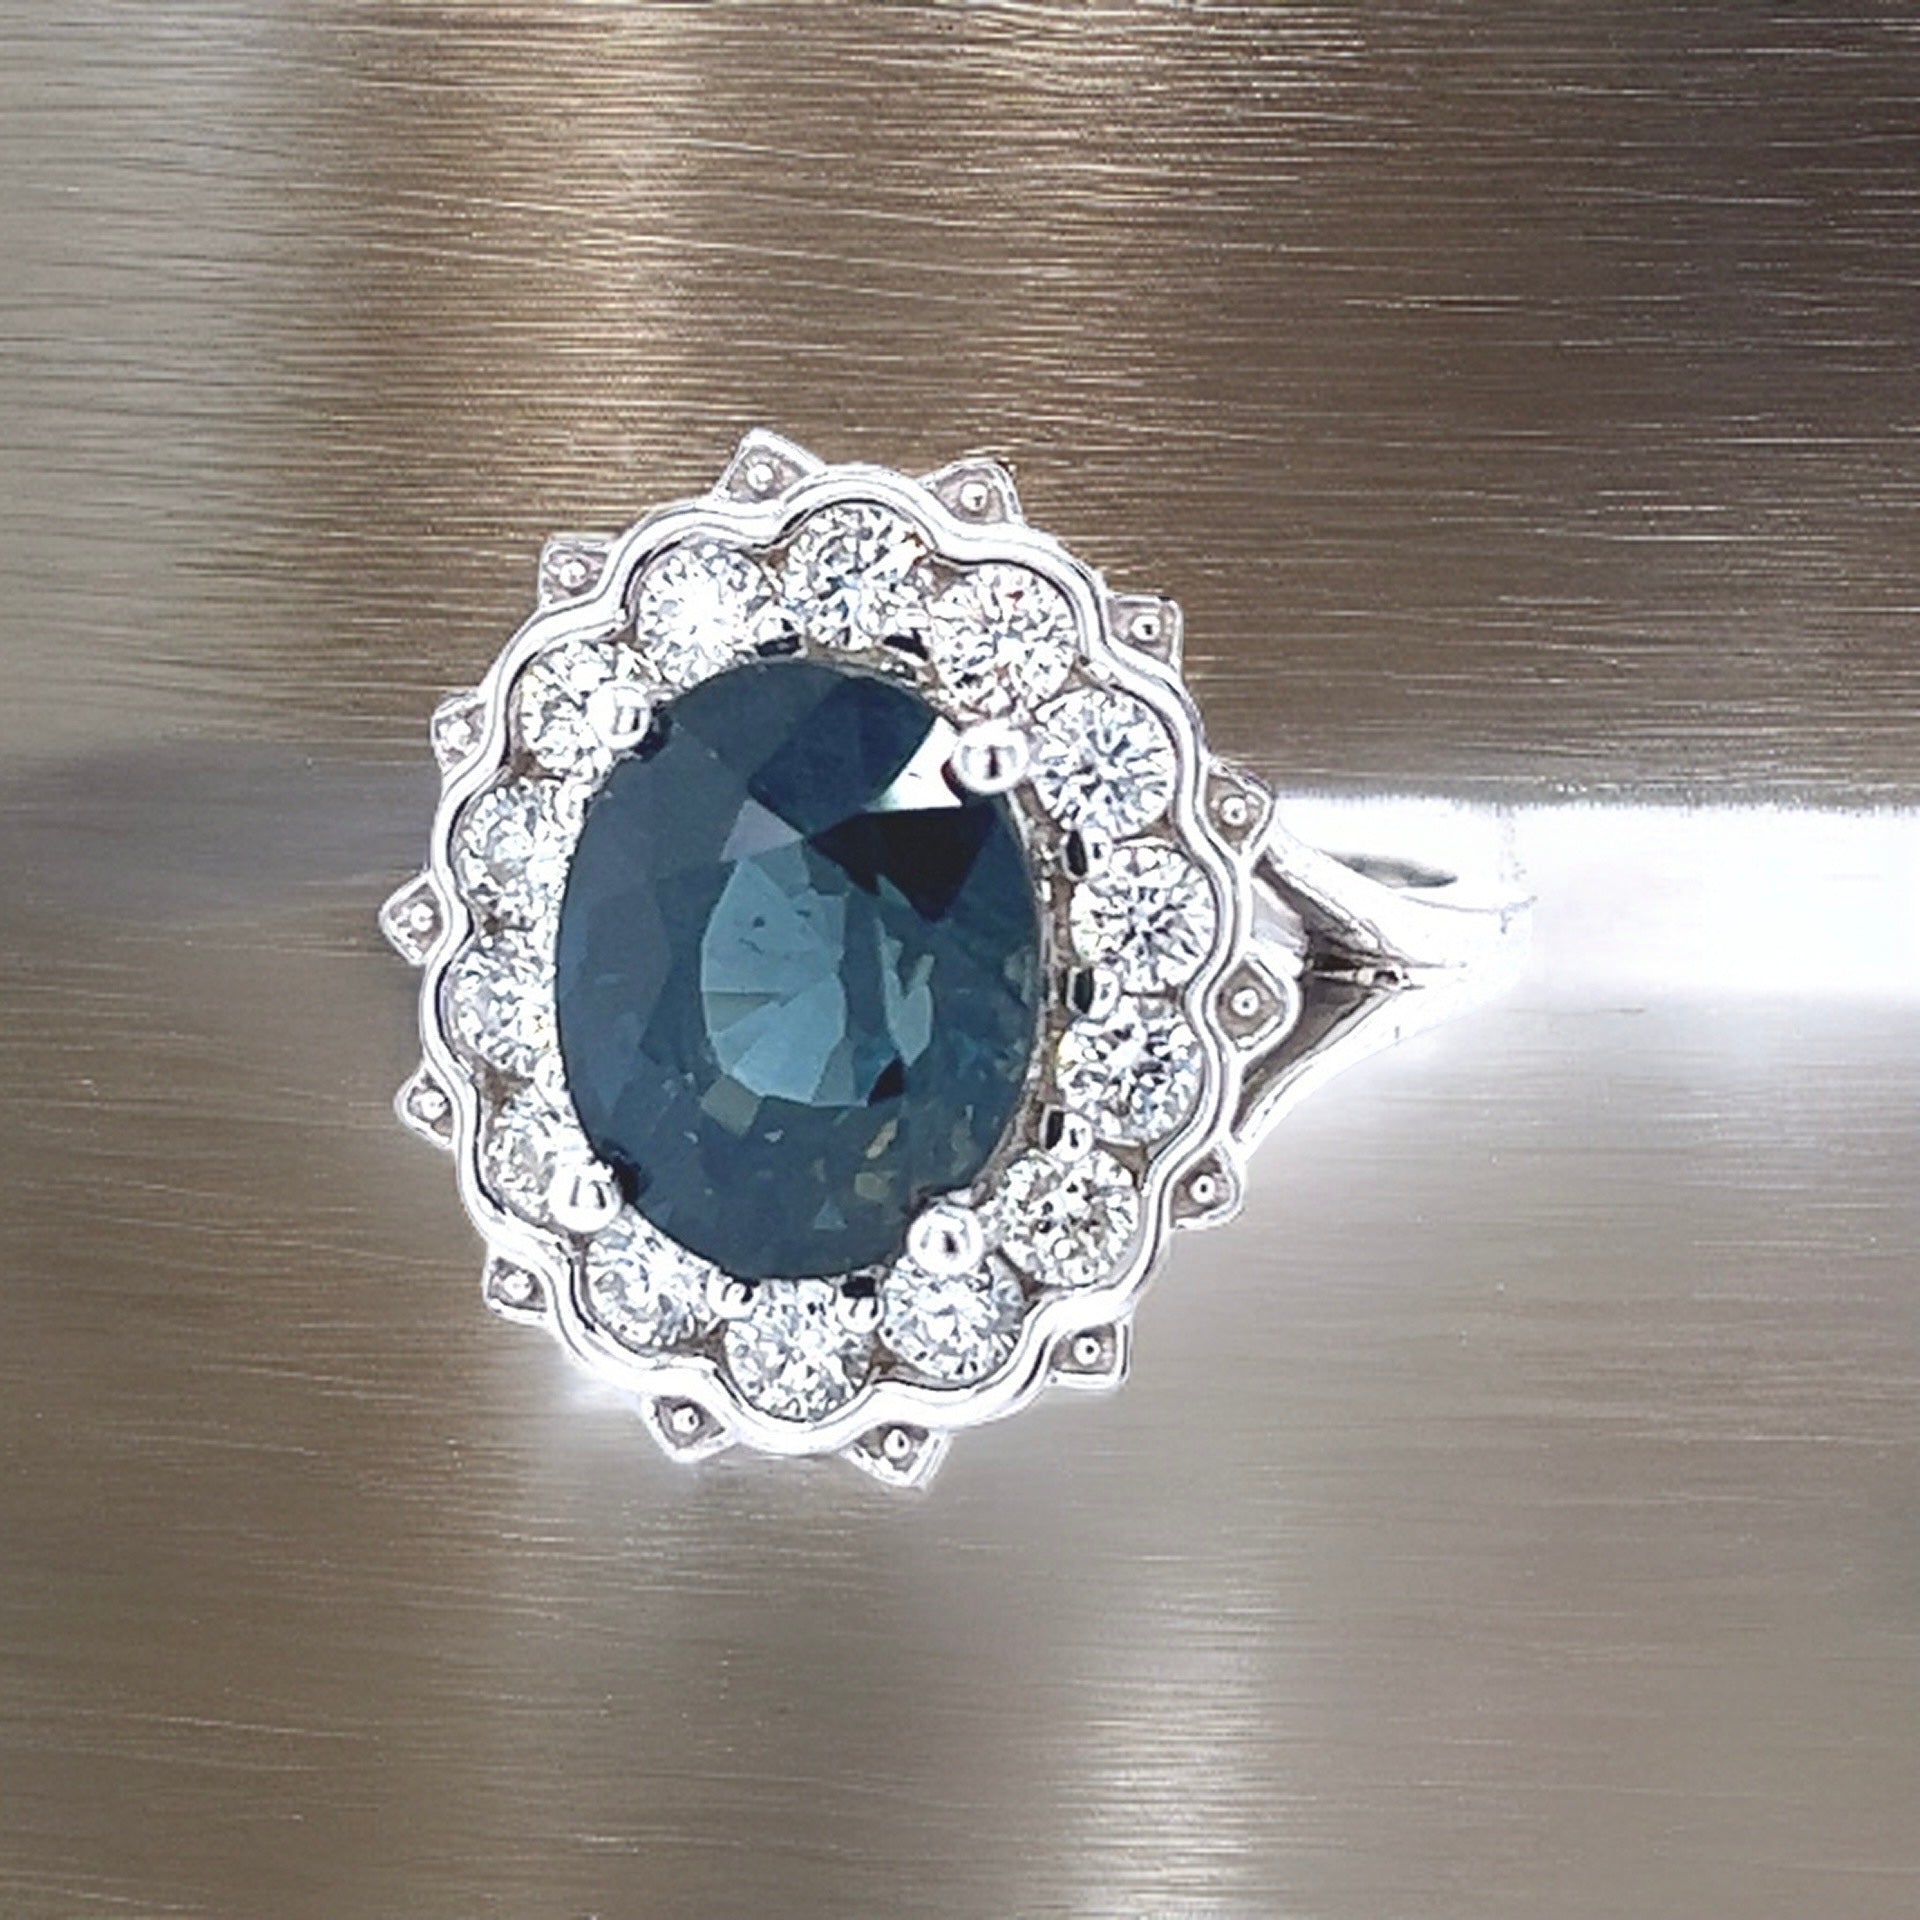 Natural Sapphire Diamond Ring Size 7 14k W Gold 5.81 TCW Certified $6,975 216685 - Certified Fine Jewelry